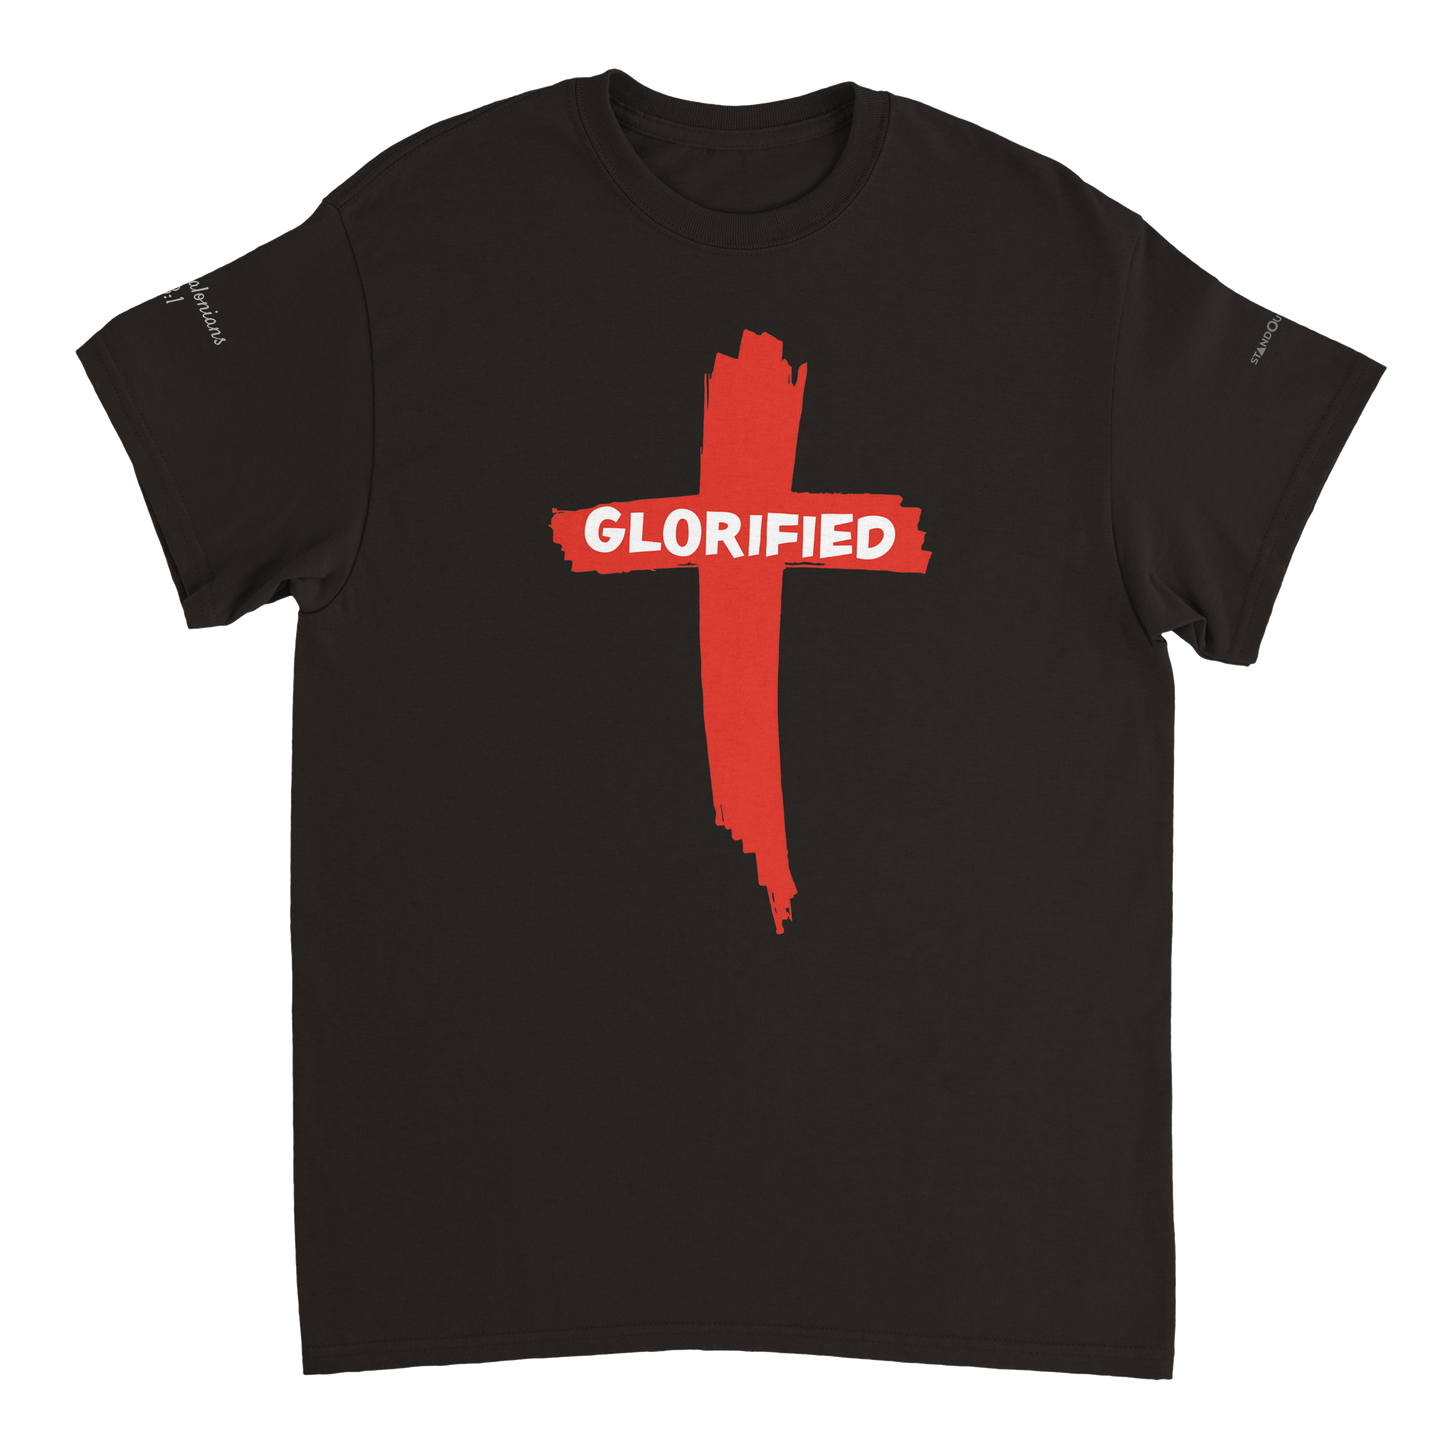 GLORIFIED T-shirt from Cross Series